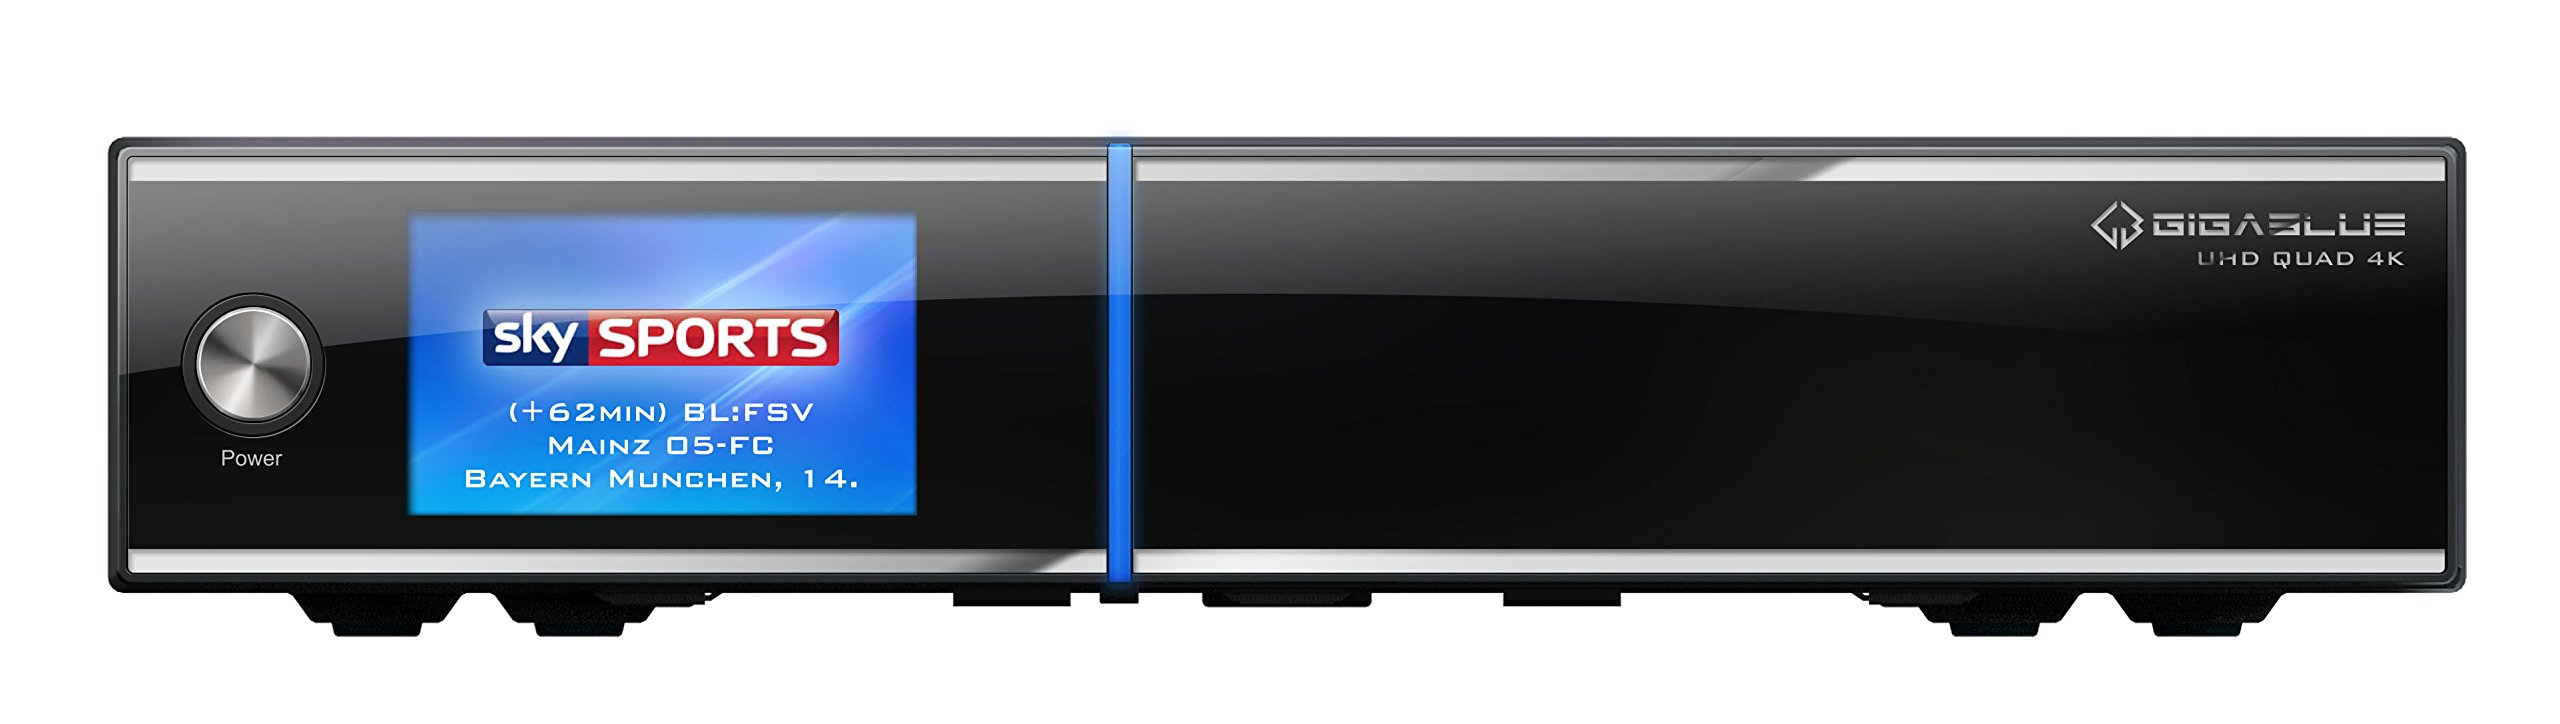 GigaBlue UHD-4K Quad 4K TV-Receiver schwarz (2000GB HDD)